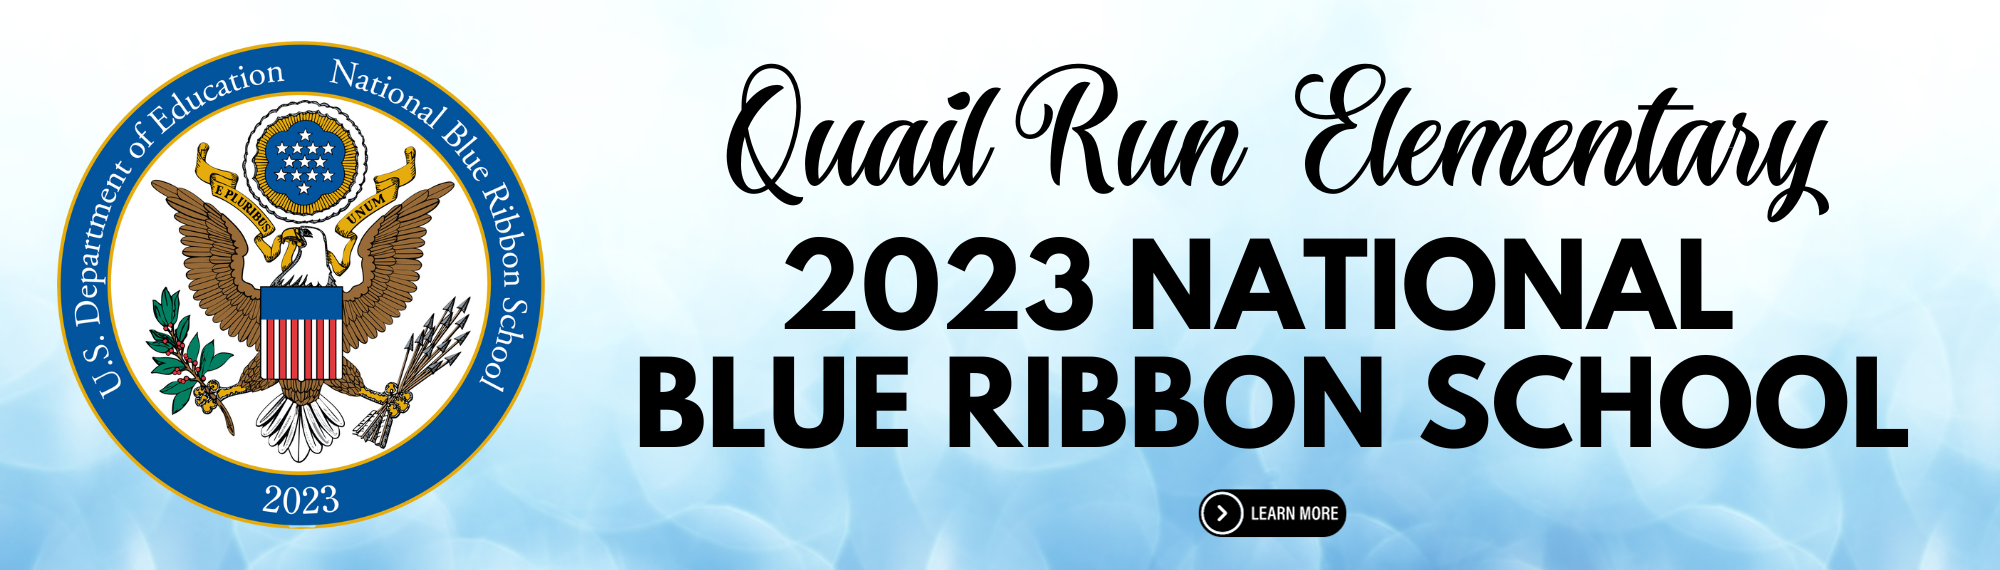 Quail Run Elementary 2023 National Blue Ribbon School. Click image for more informaiton.